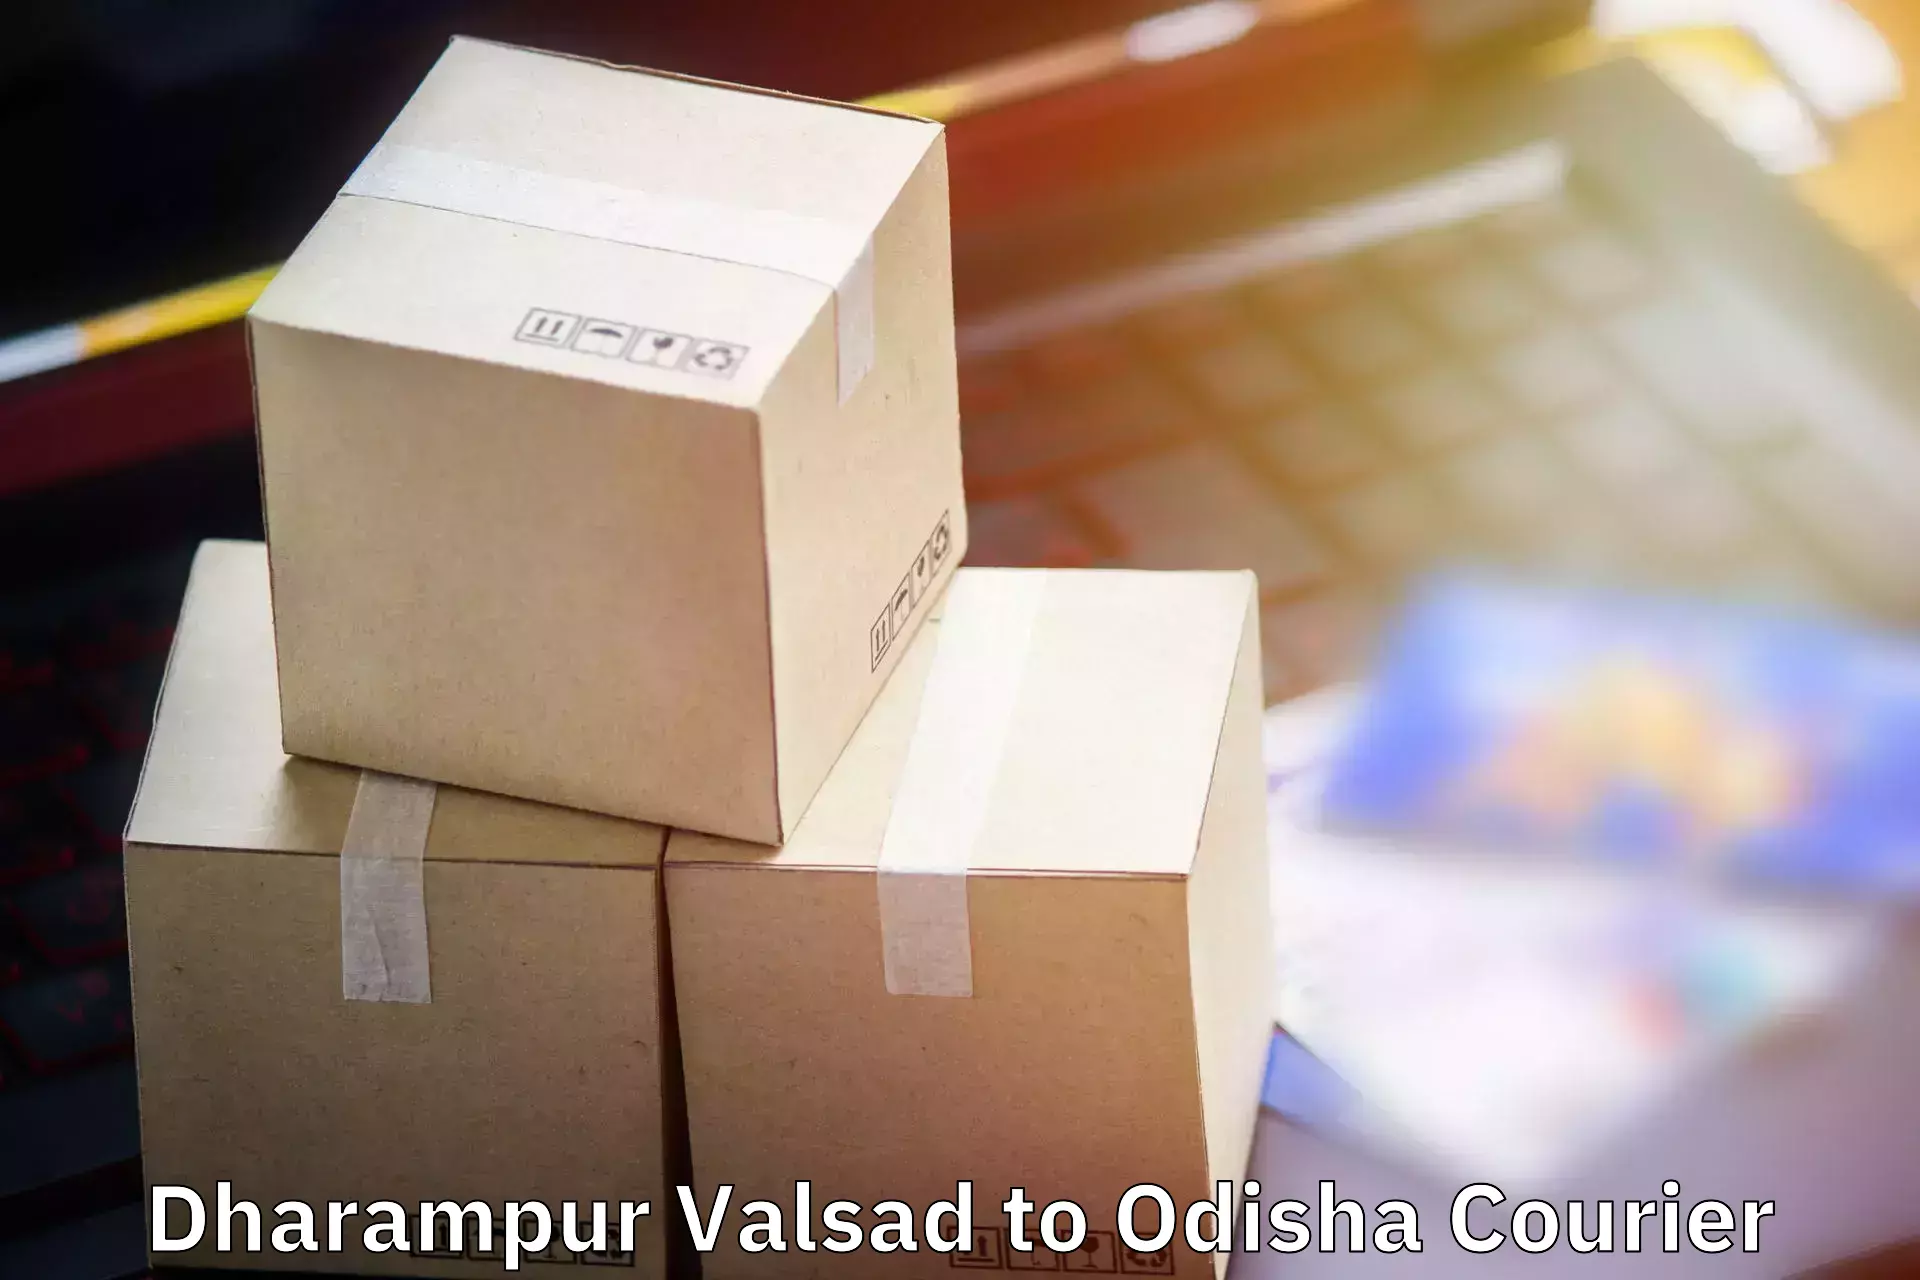 Baggage relocation service Dharampur Valsad to Morada